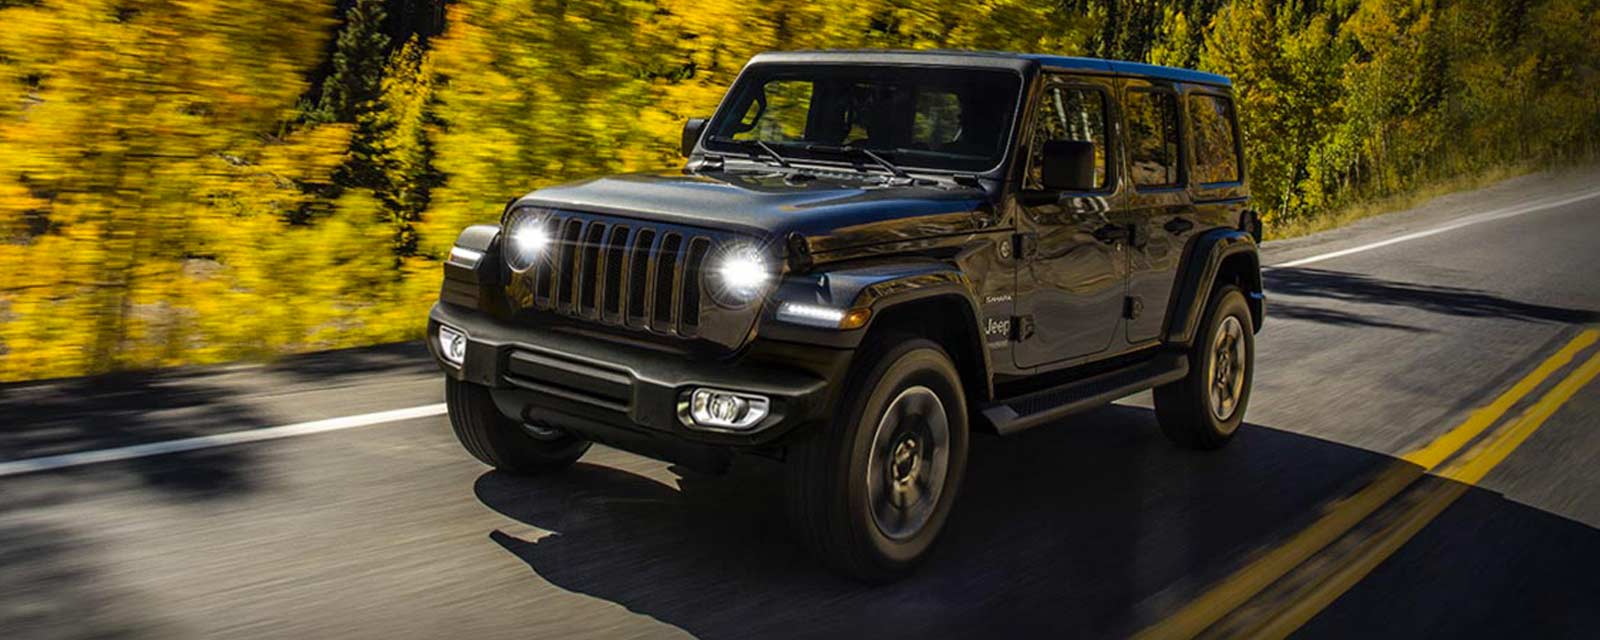 Jeep Wrangler Sahara på väg